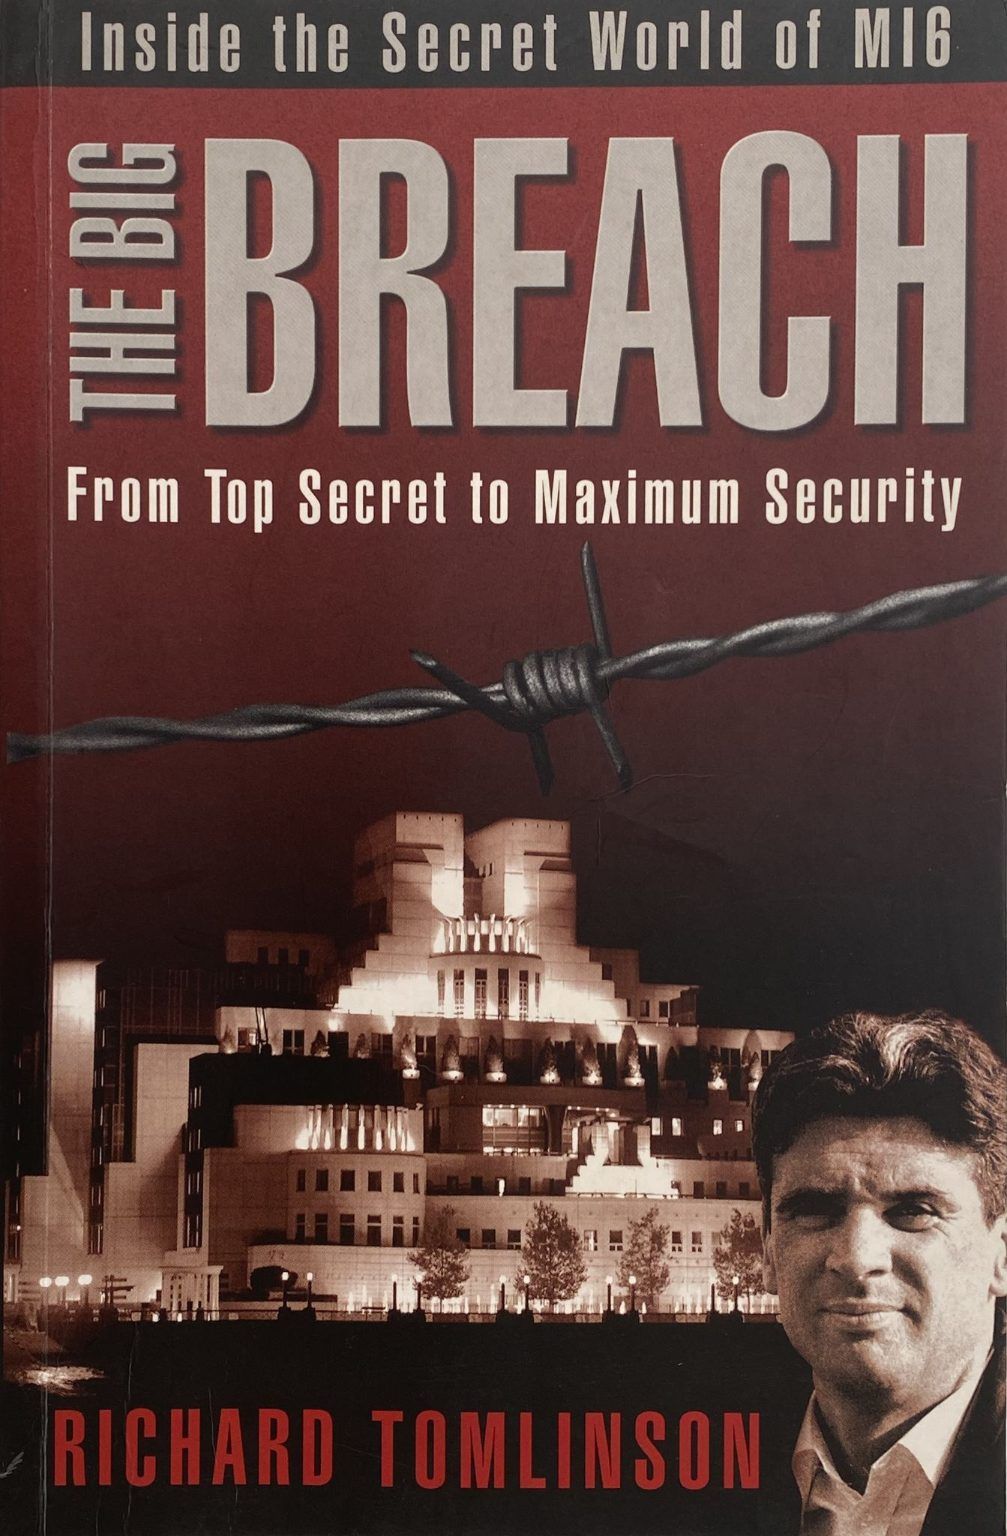 THE BIG BREACH: Inside The Secret World of MI6